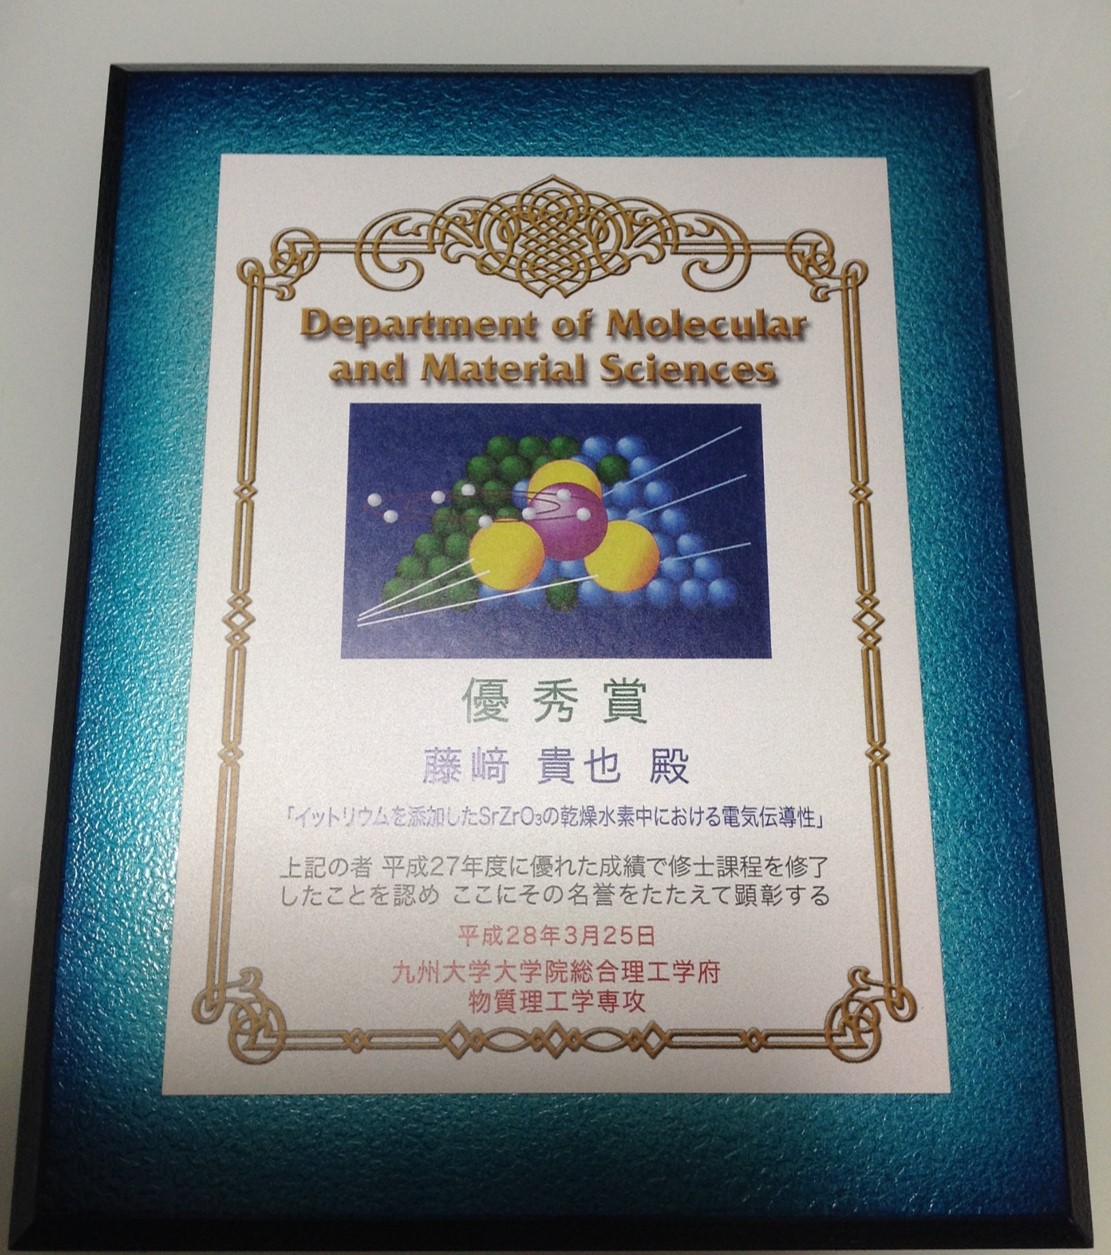 Fujisaki(M2) won the excellent award of the master’s program.